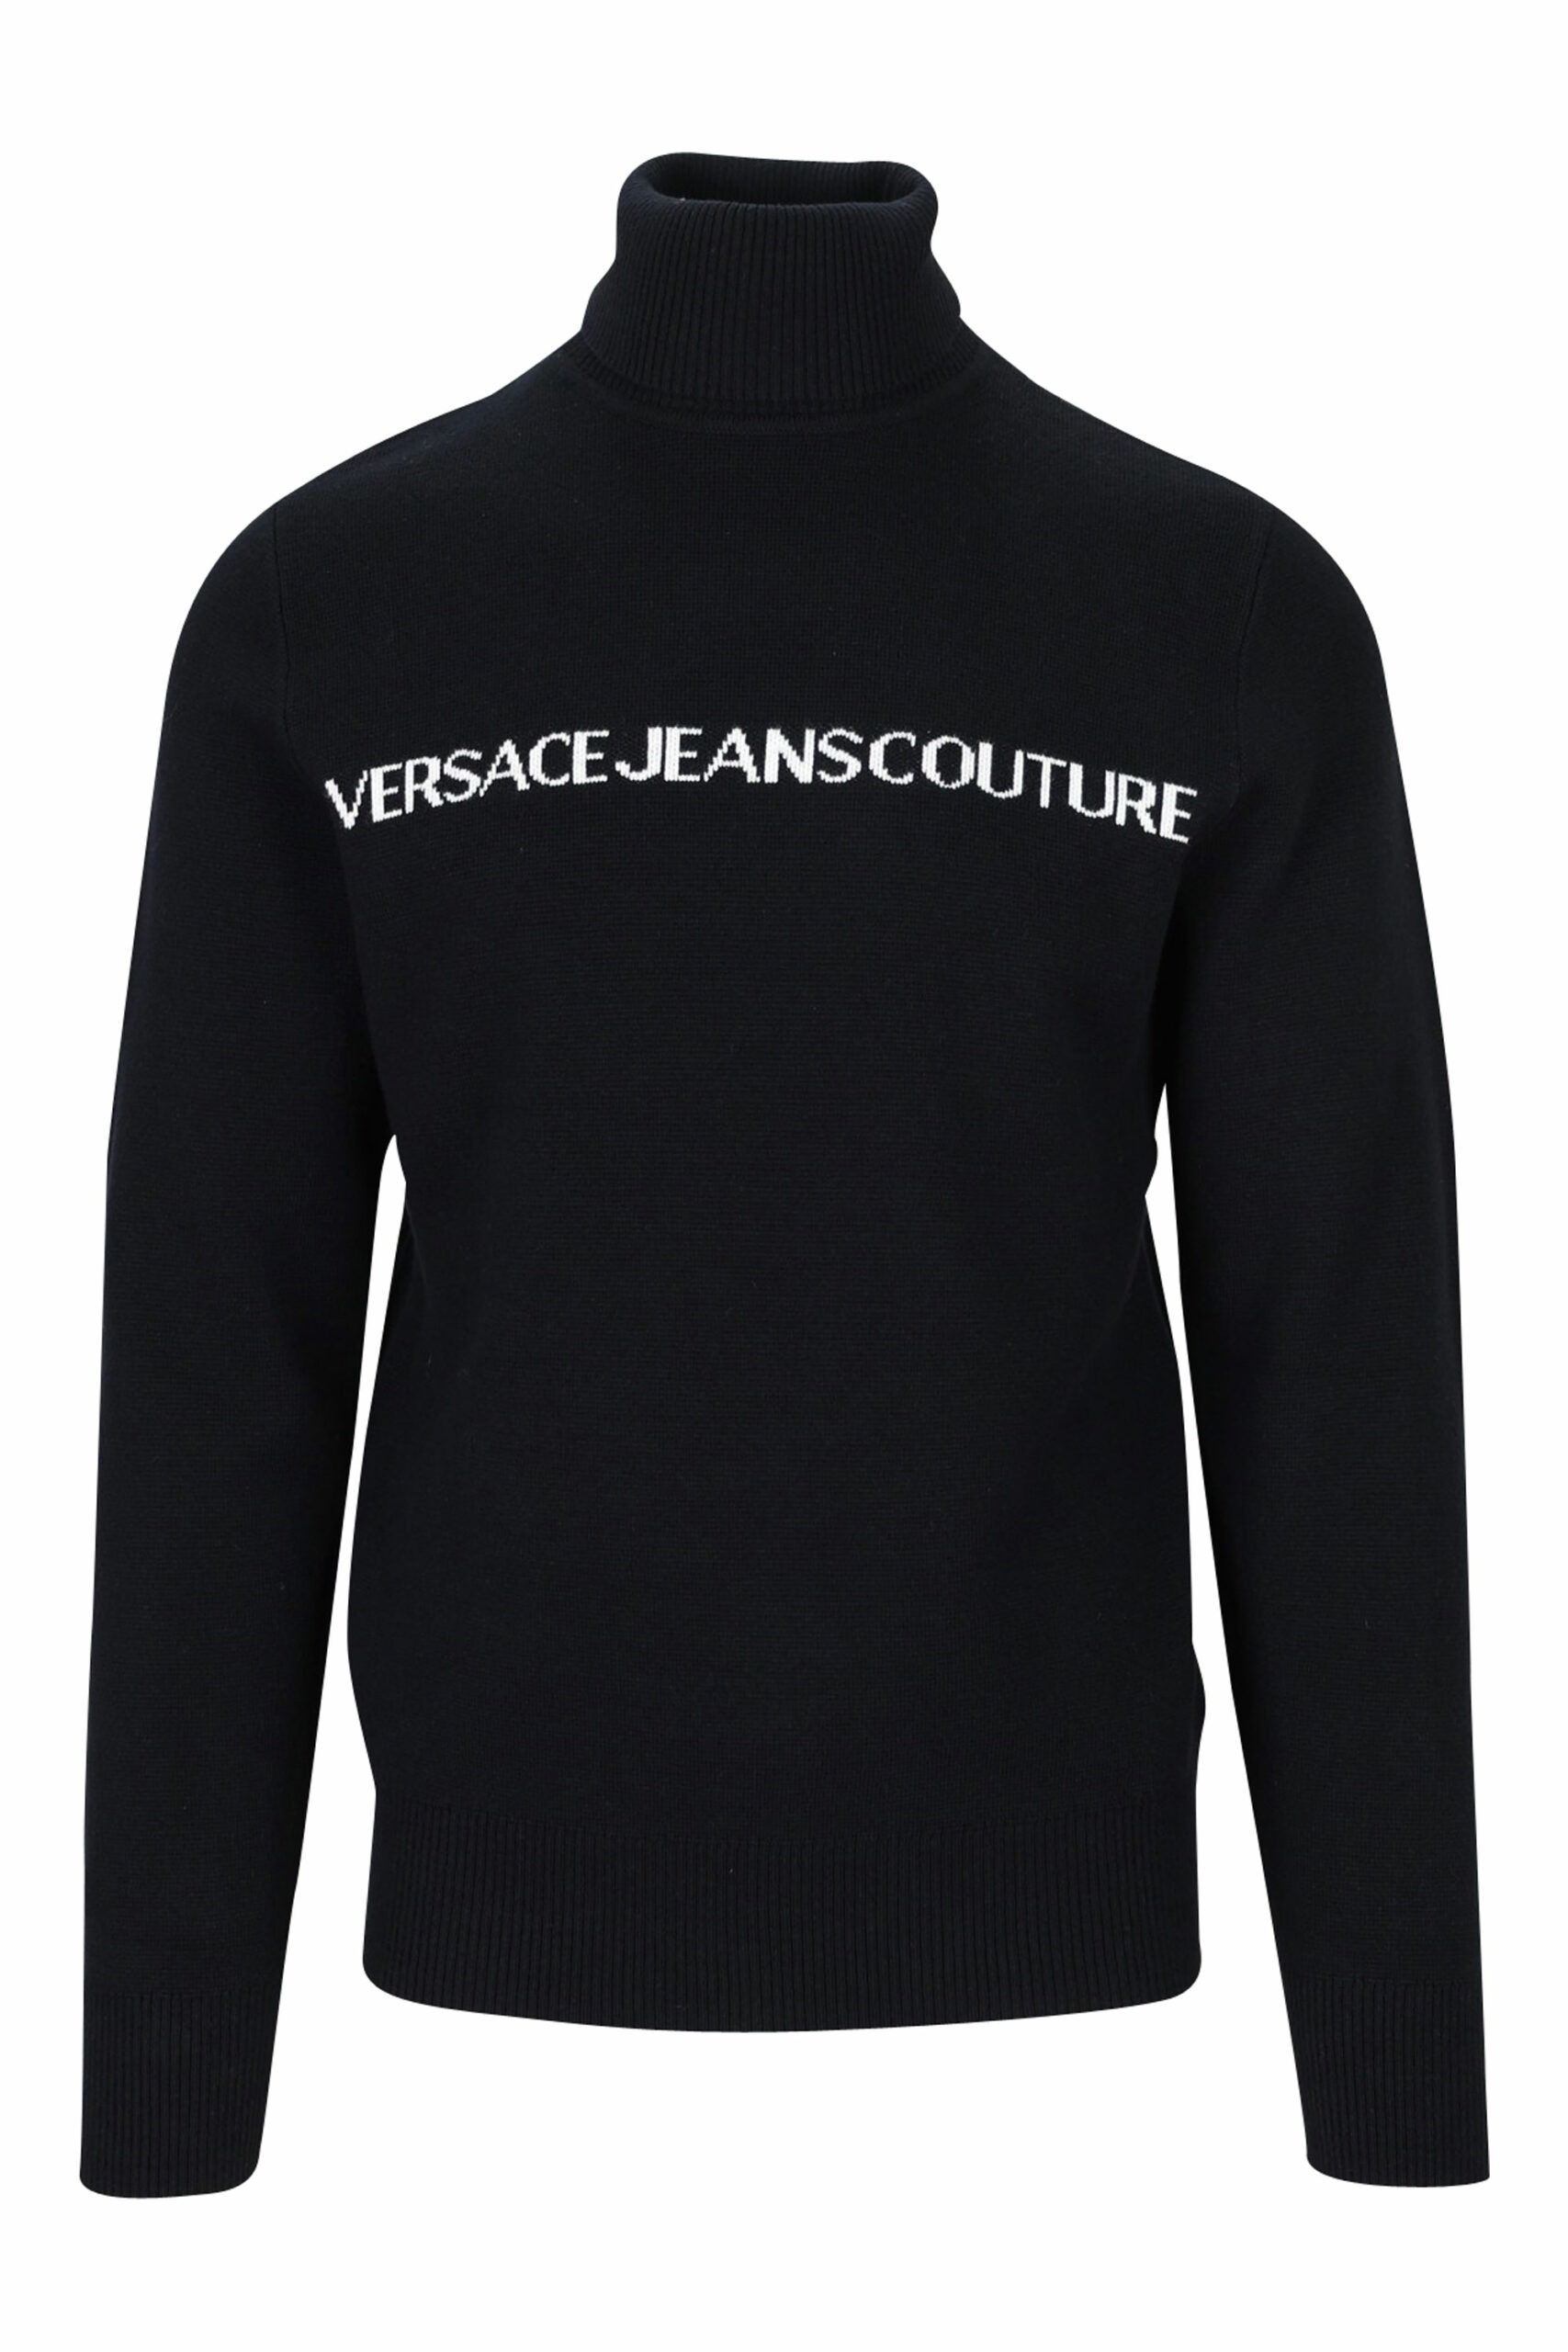 Versace Jeans Couture - Camisola preta com logótipo neon maxi